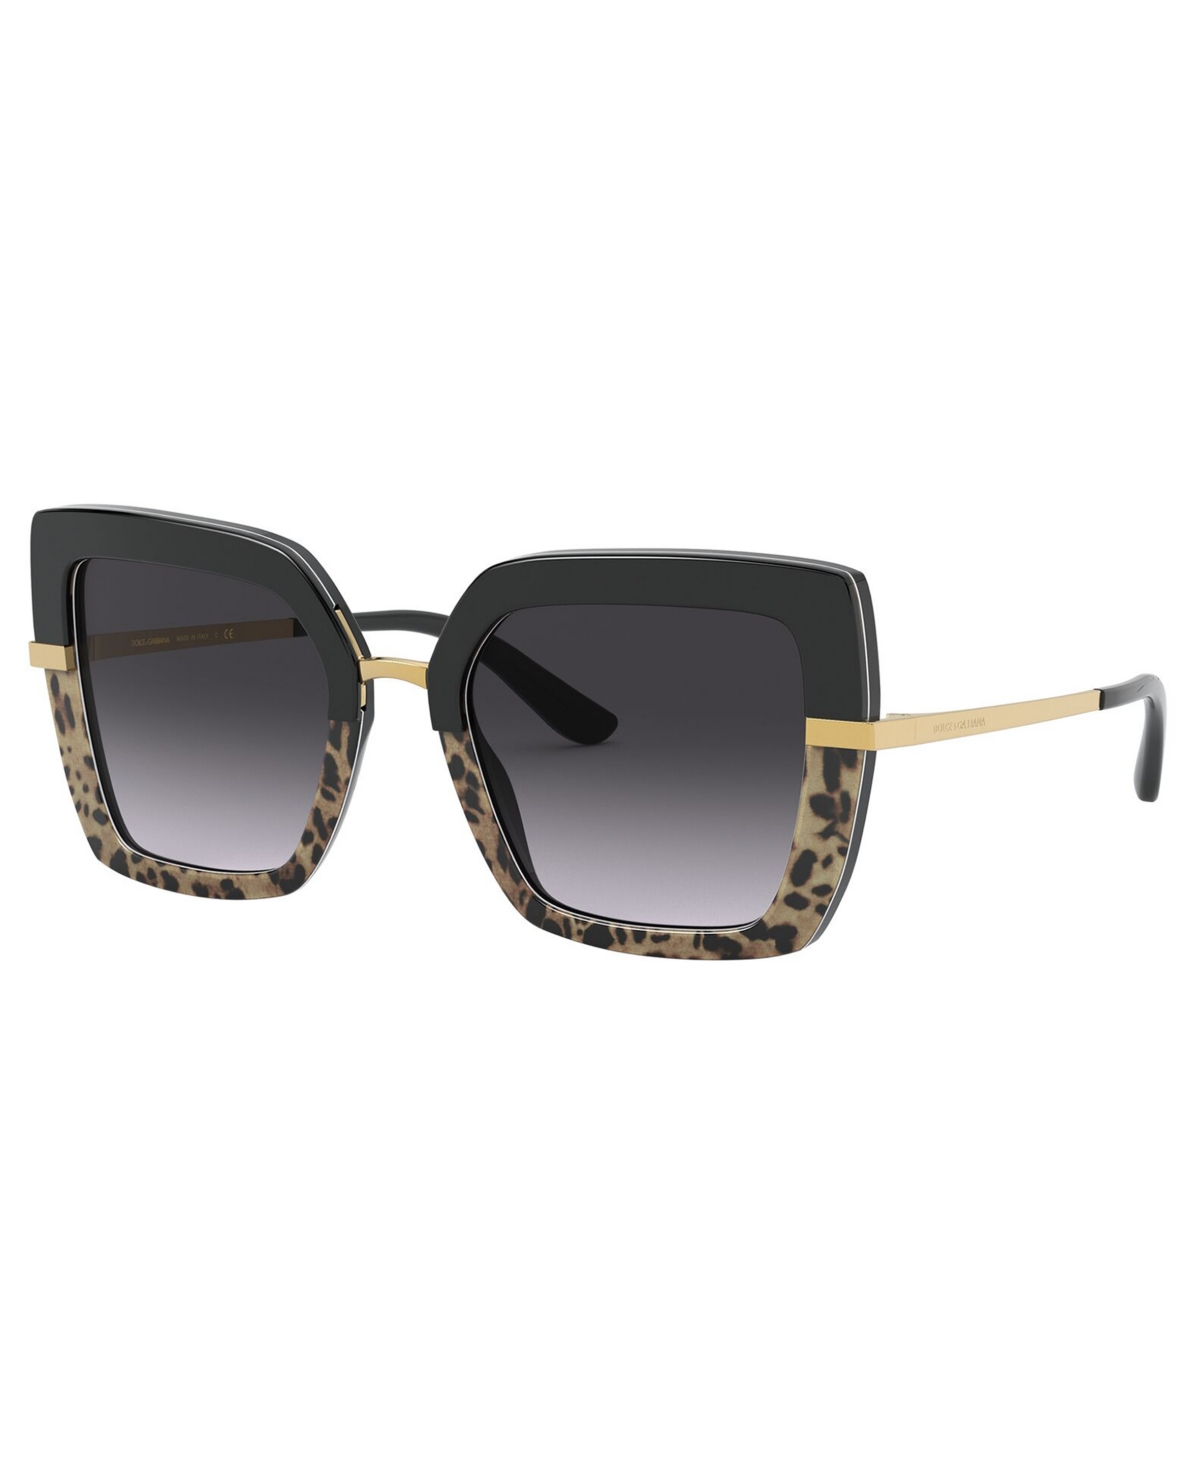 Dolce&Gabbana Sunglasses, DG4373 - TOP BLACK ON PRINT LEO/BLACK/GREY GRADIE